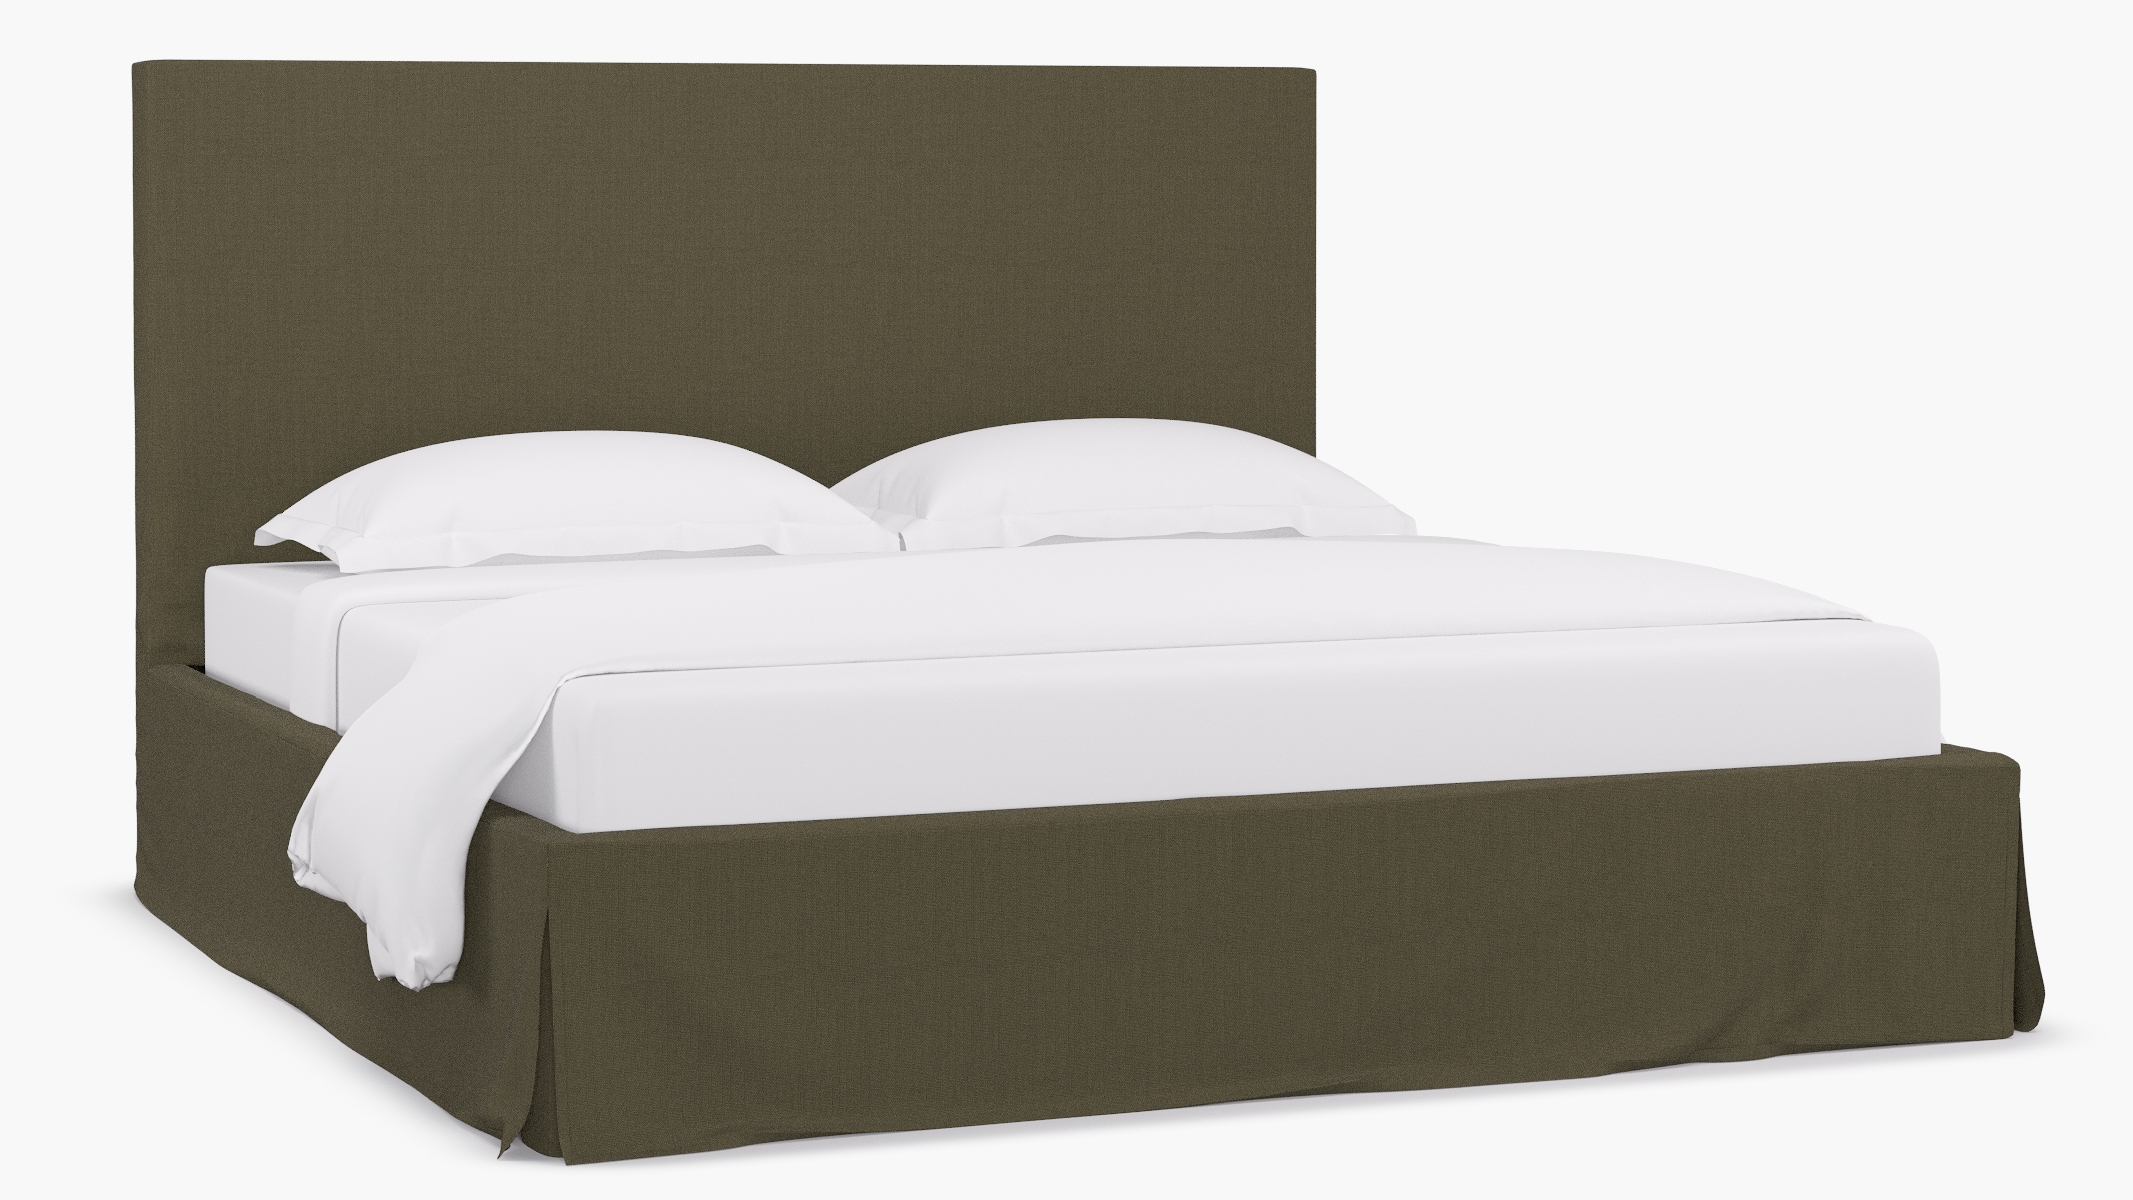 Slipcovered Bed, Olive Everyday Linen, King - Image 0